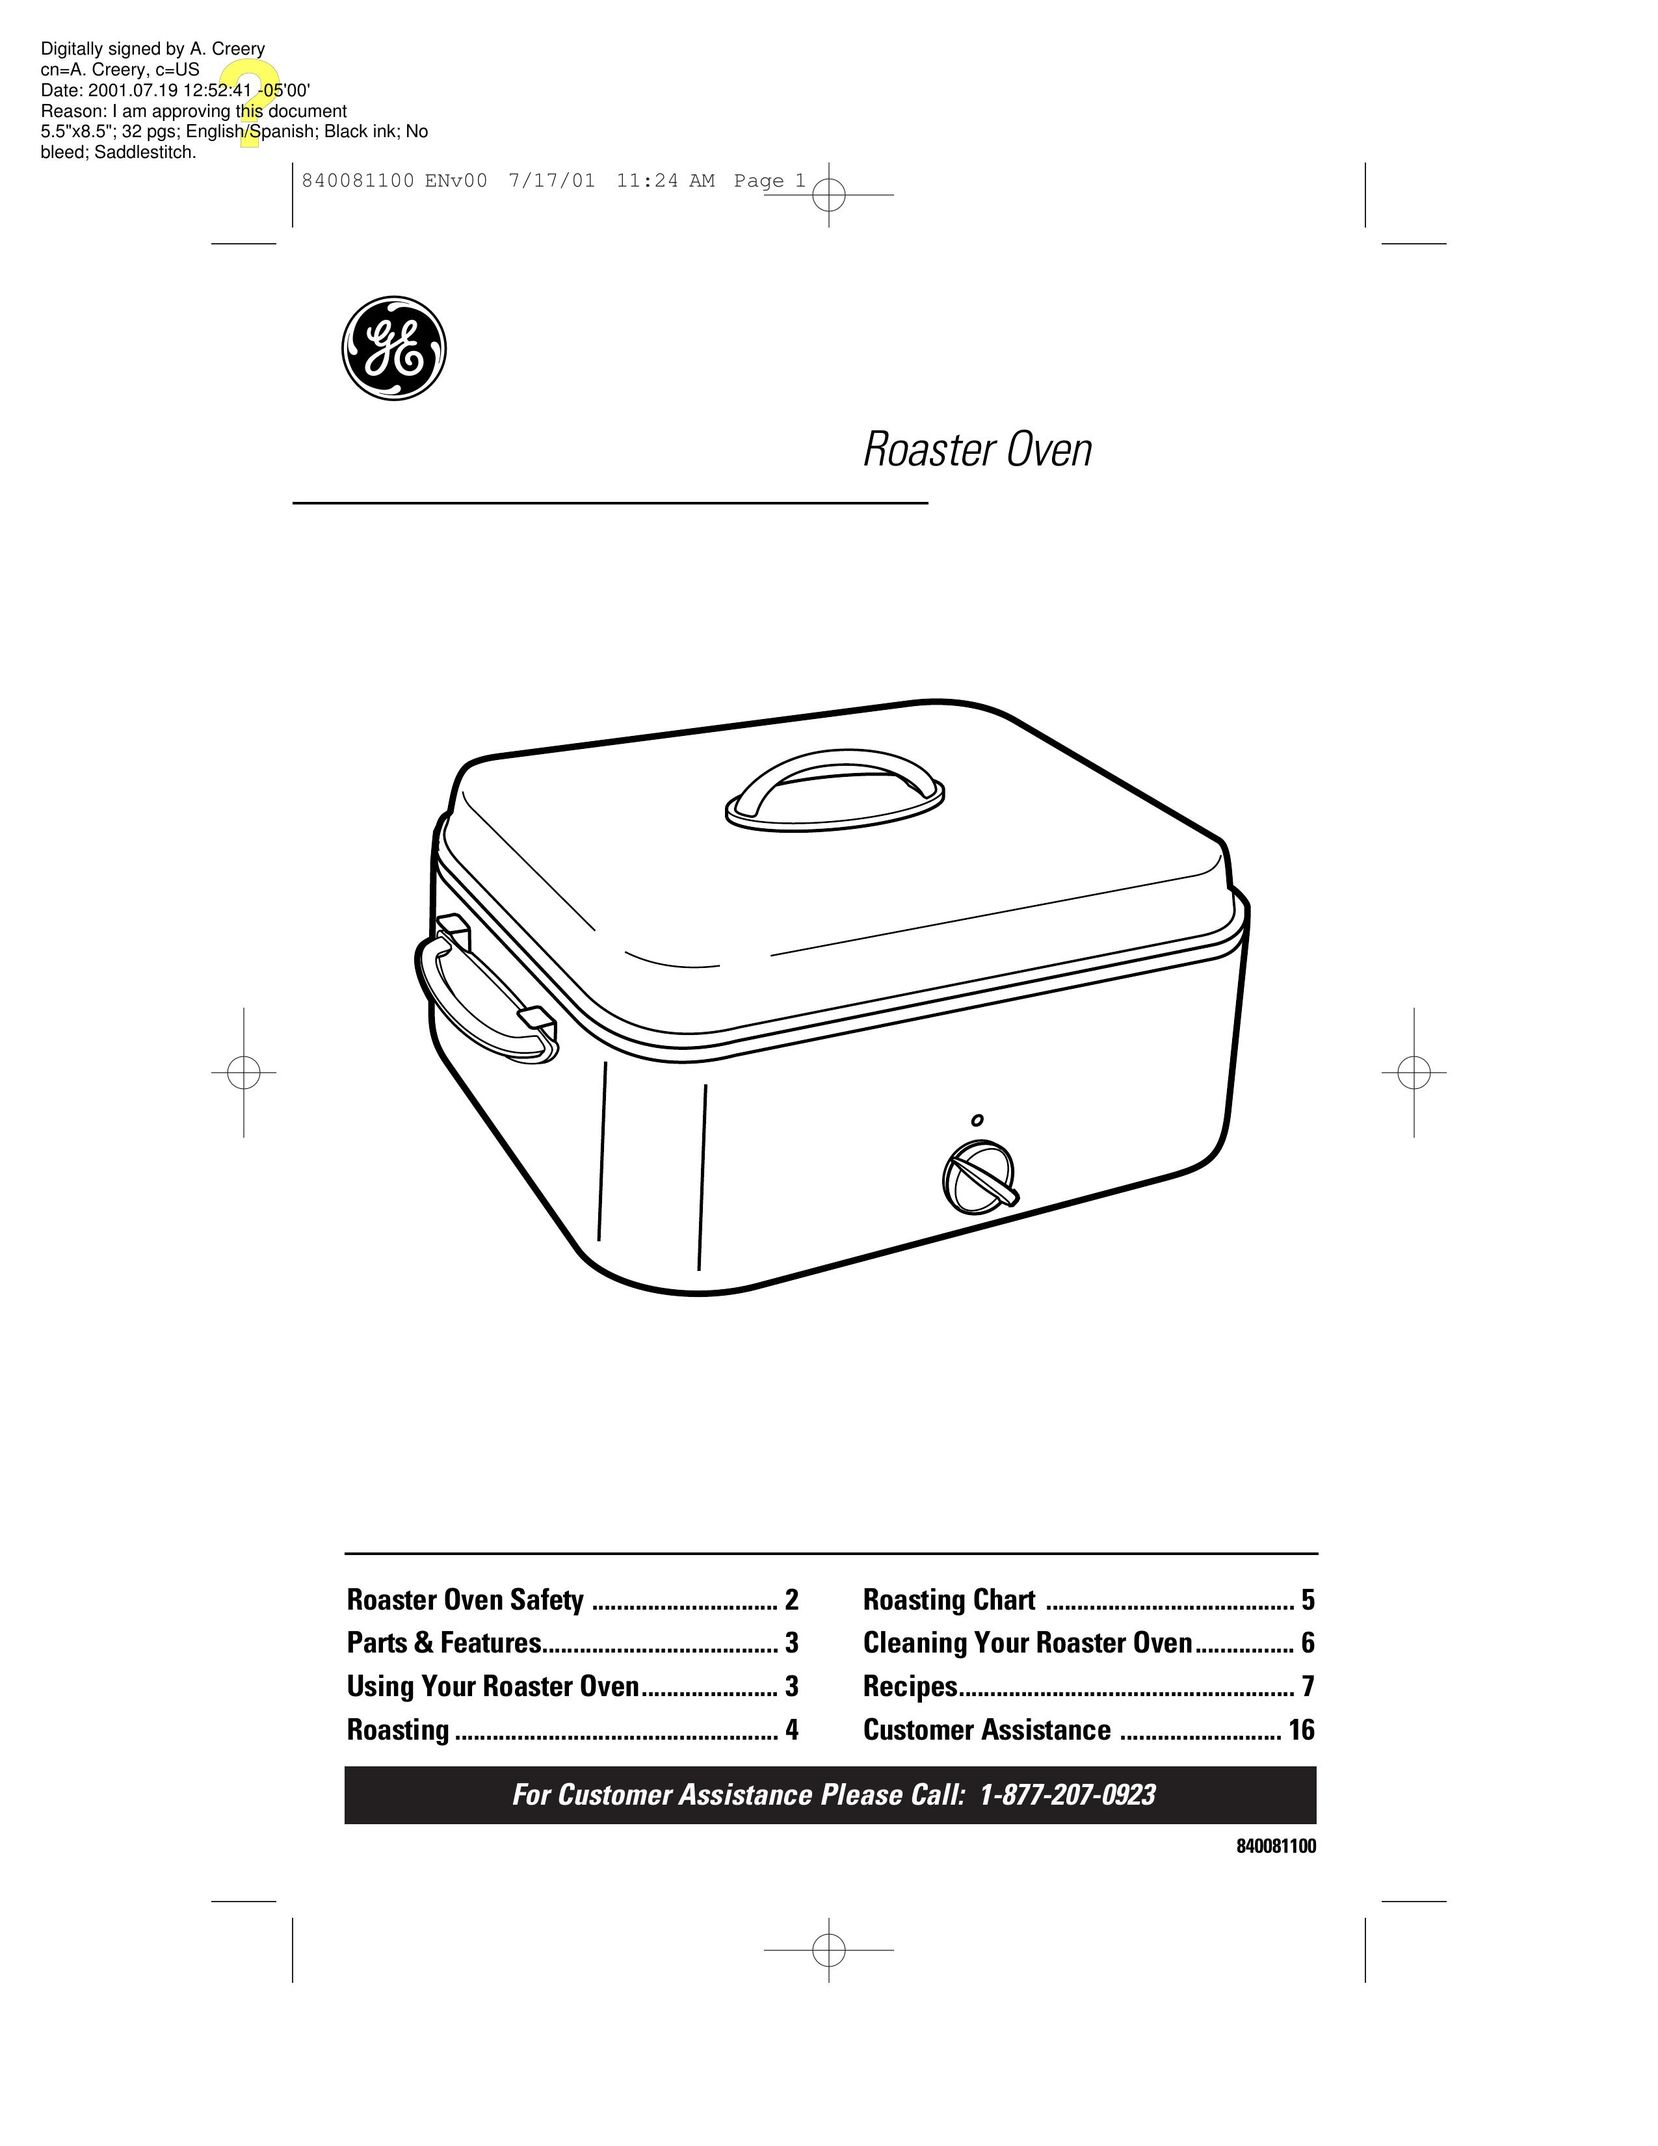 GE 840081100 Oven User Manual